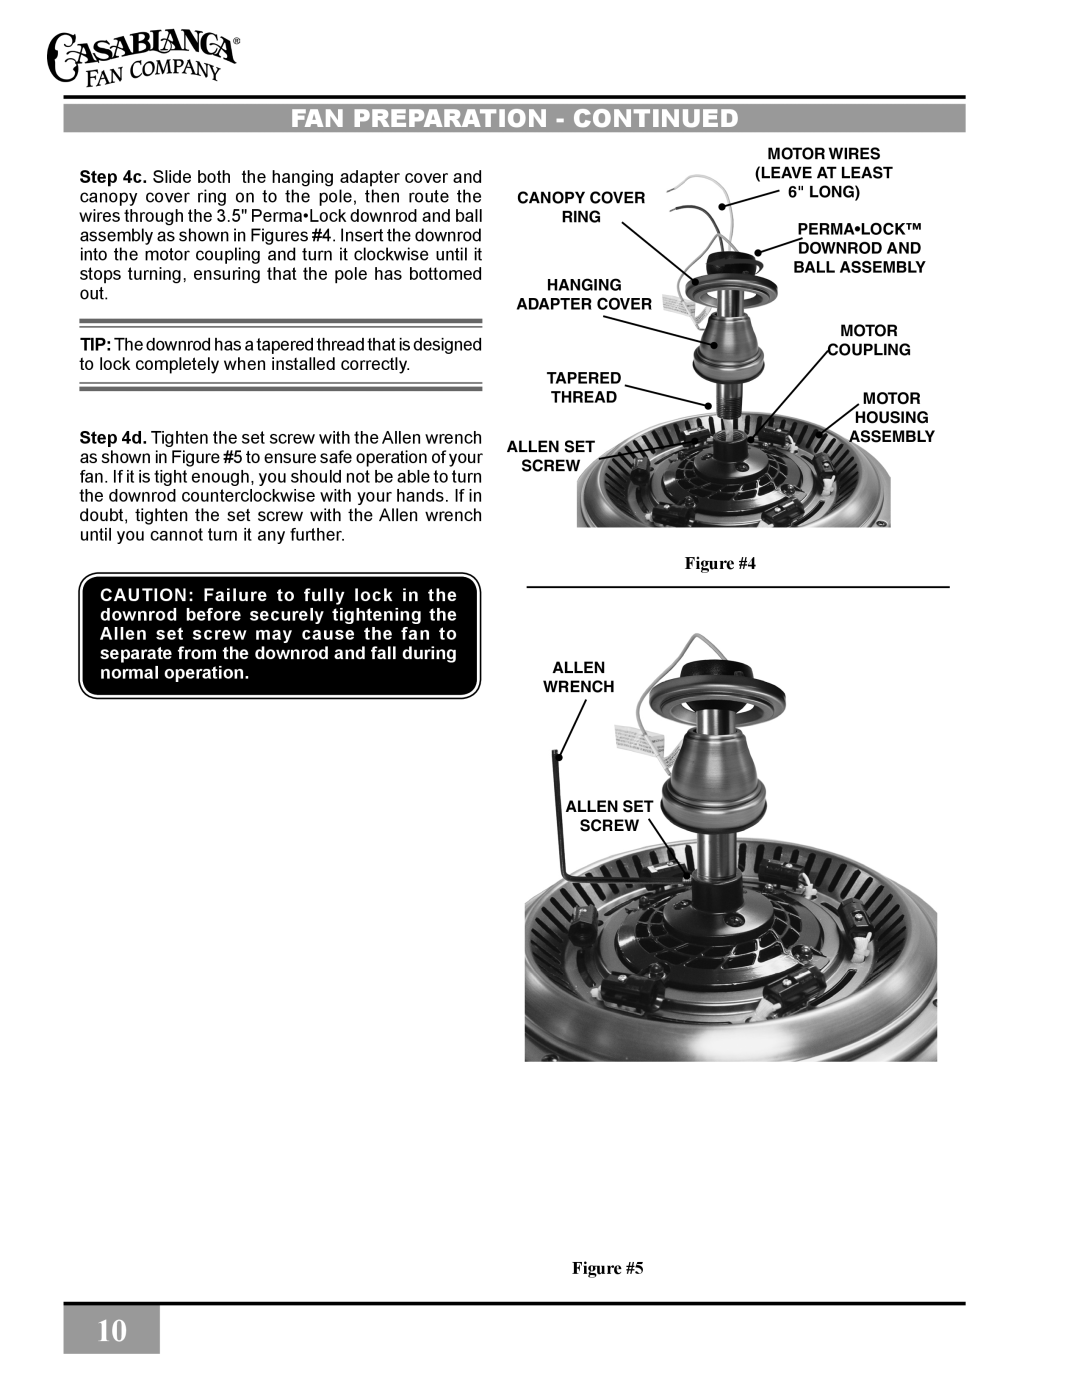 Casablanca Fan Company C31UxxZ owner manual Fan Preparation - continued, Figure #4, Figure #5 